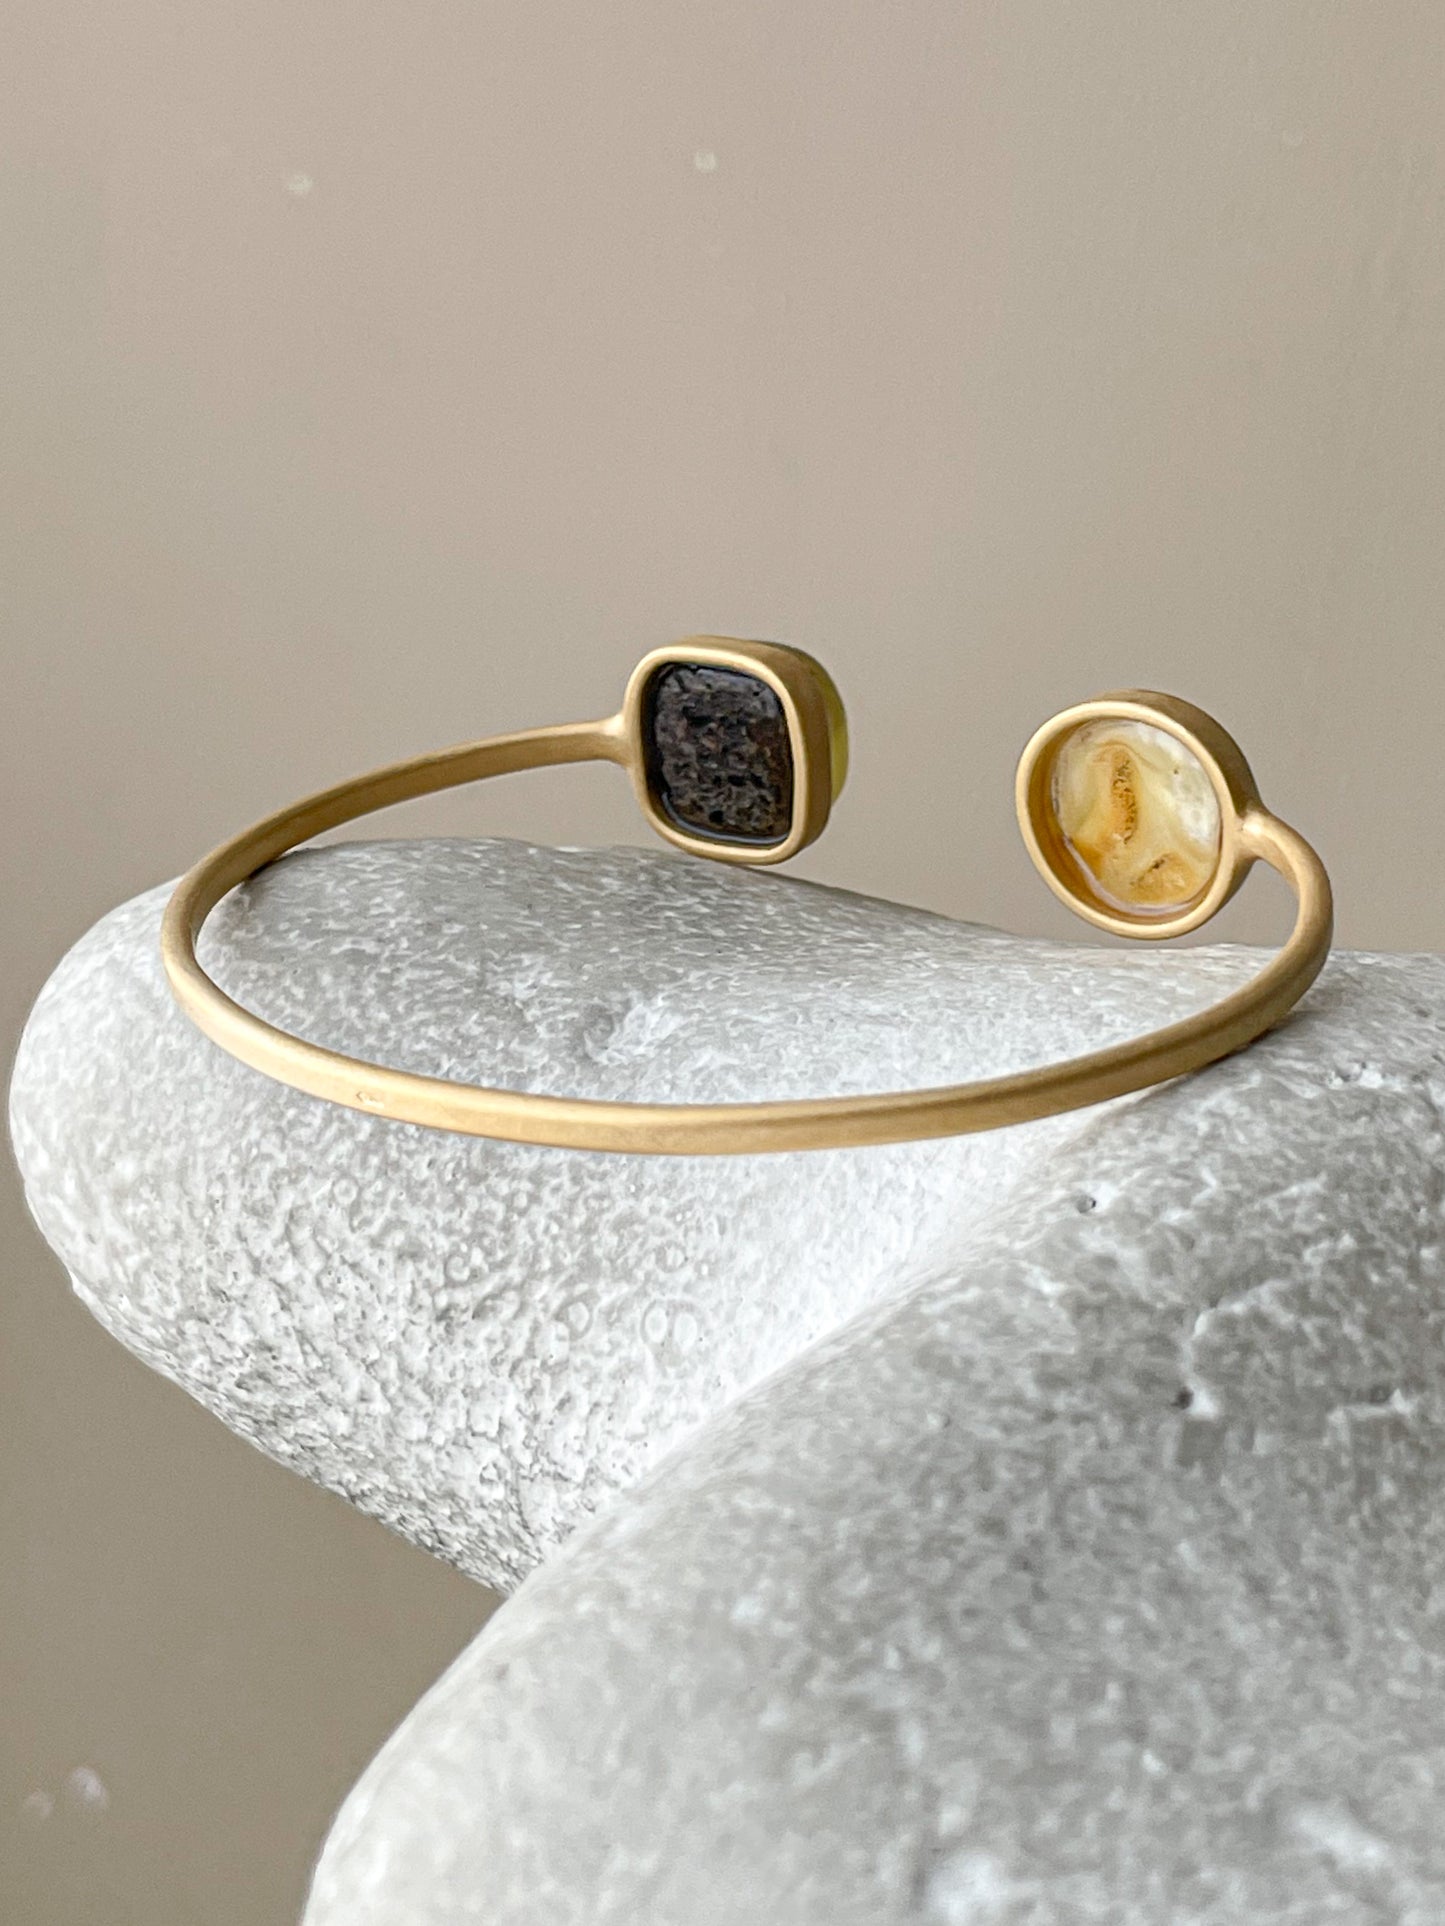 Amber bracelet - Gold plated silver - Cuff bracelet collection - Size 6.3